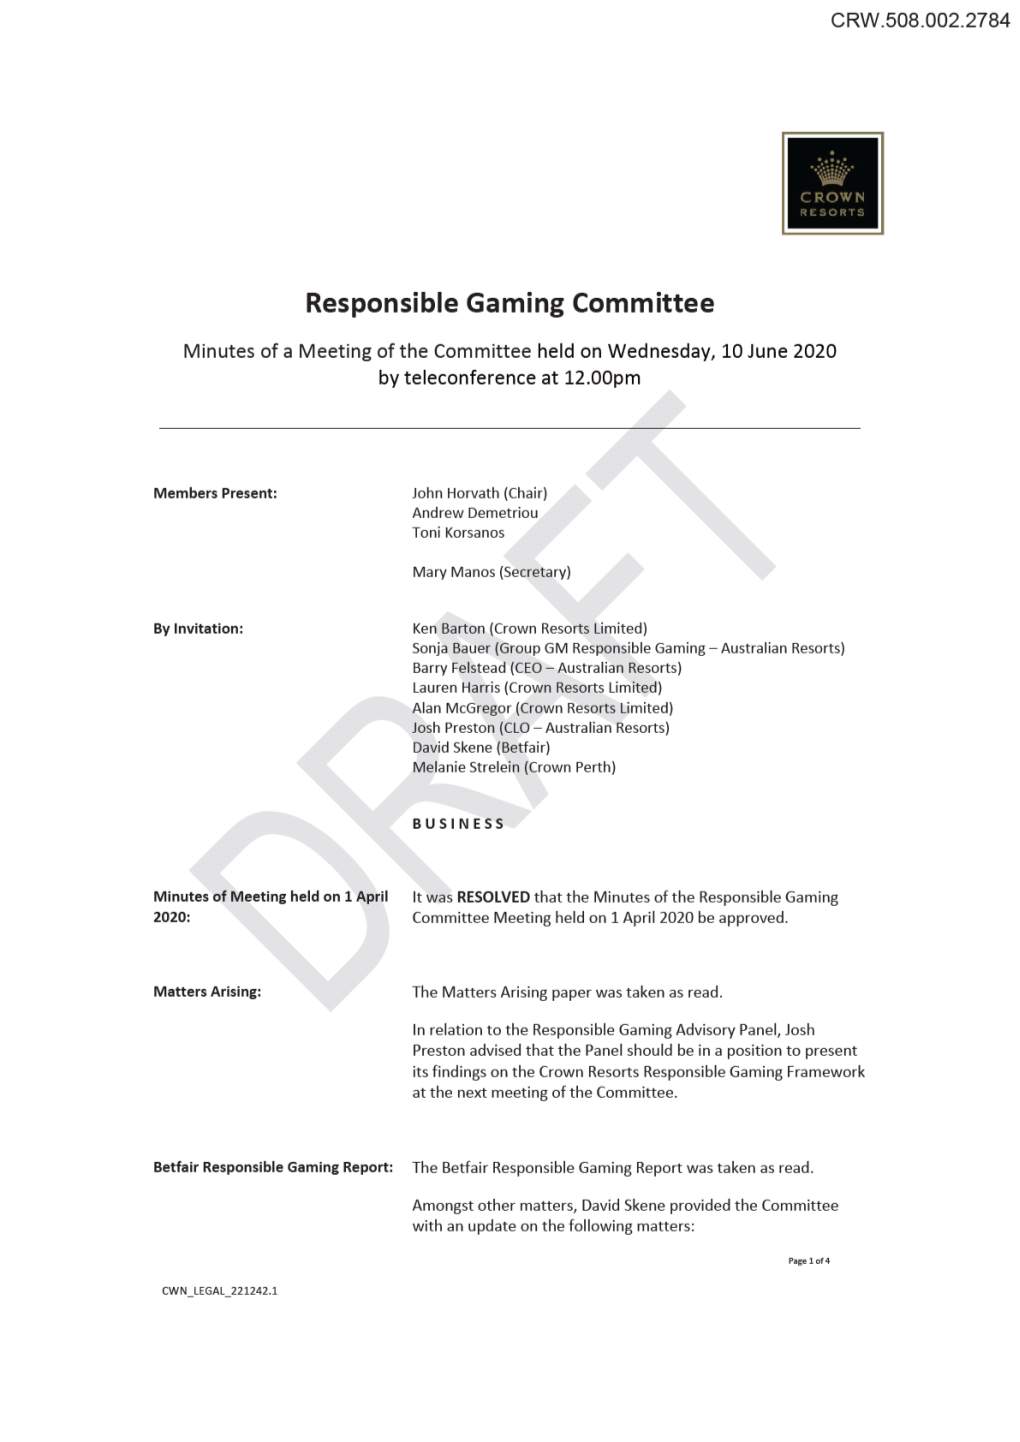 Responsible Gaming Committee